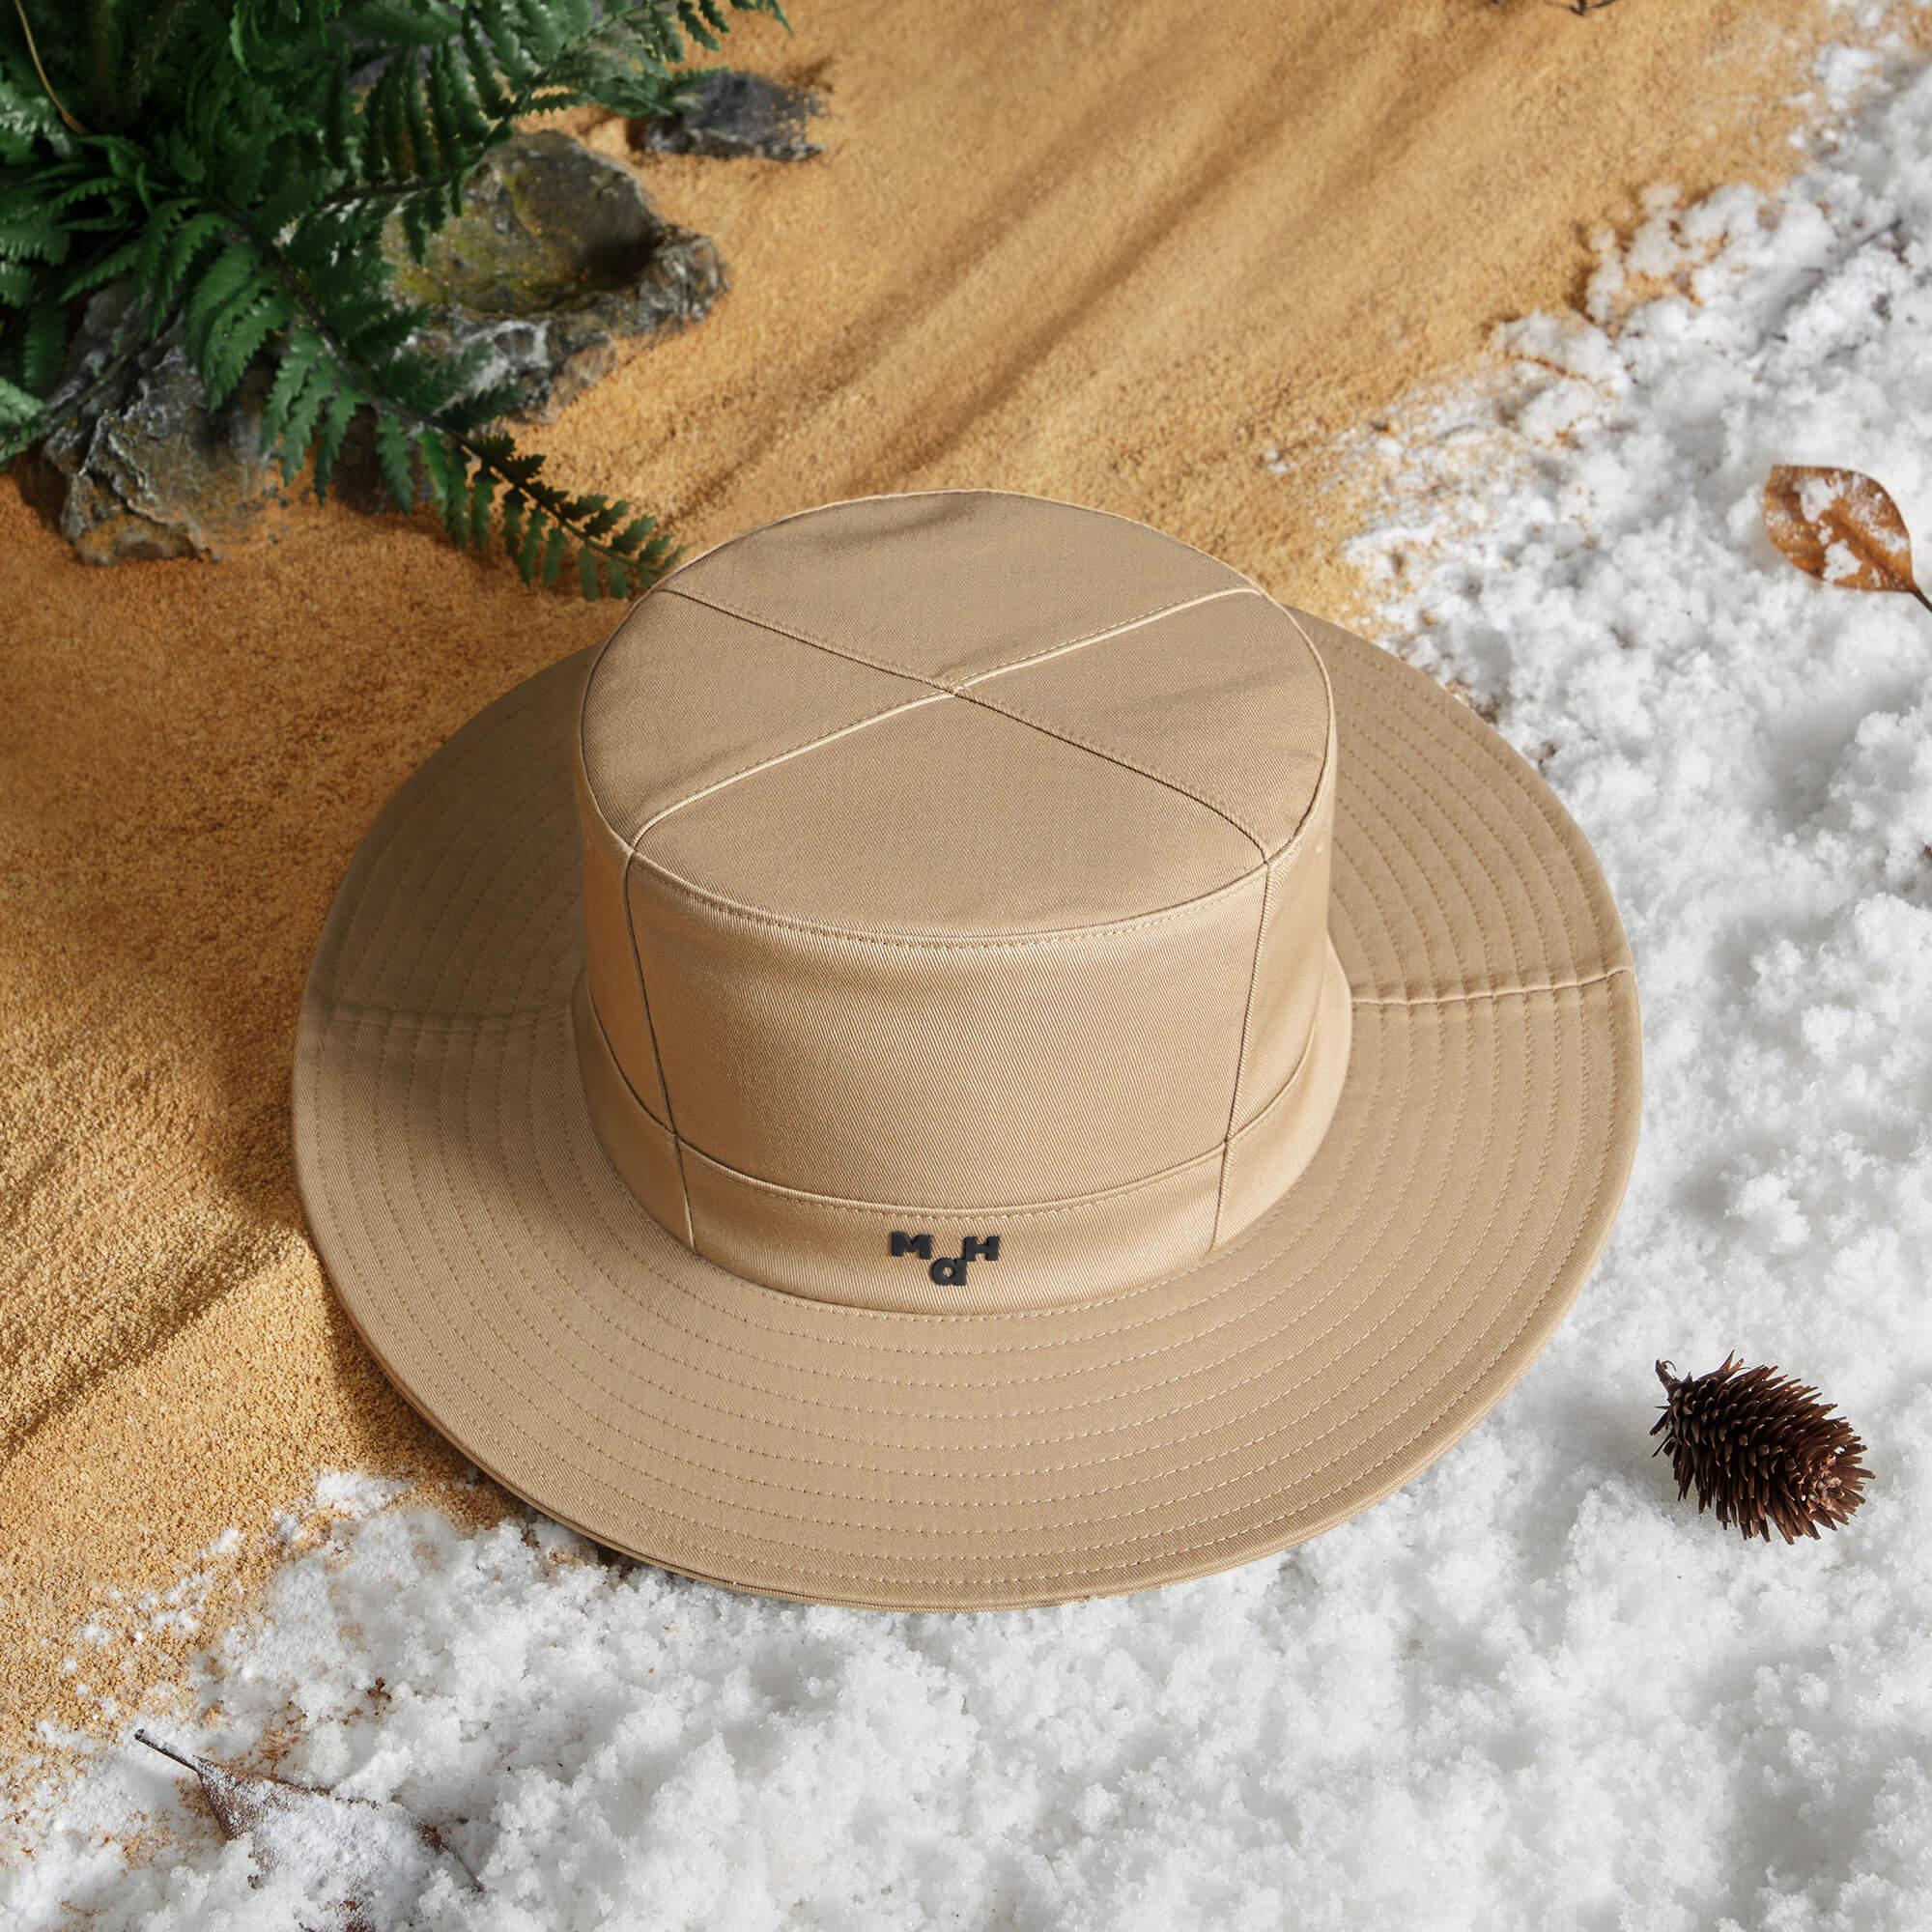 Coolmax Sun Hat For Summer